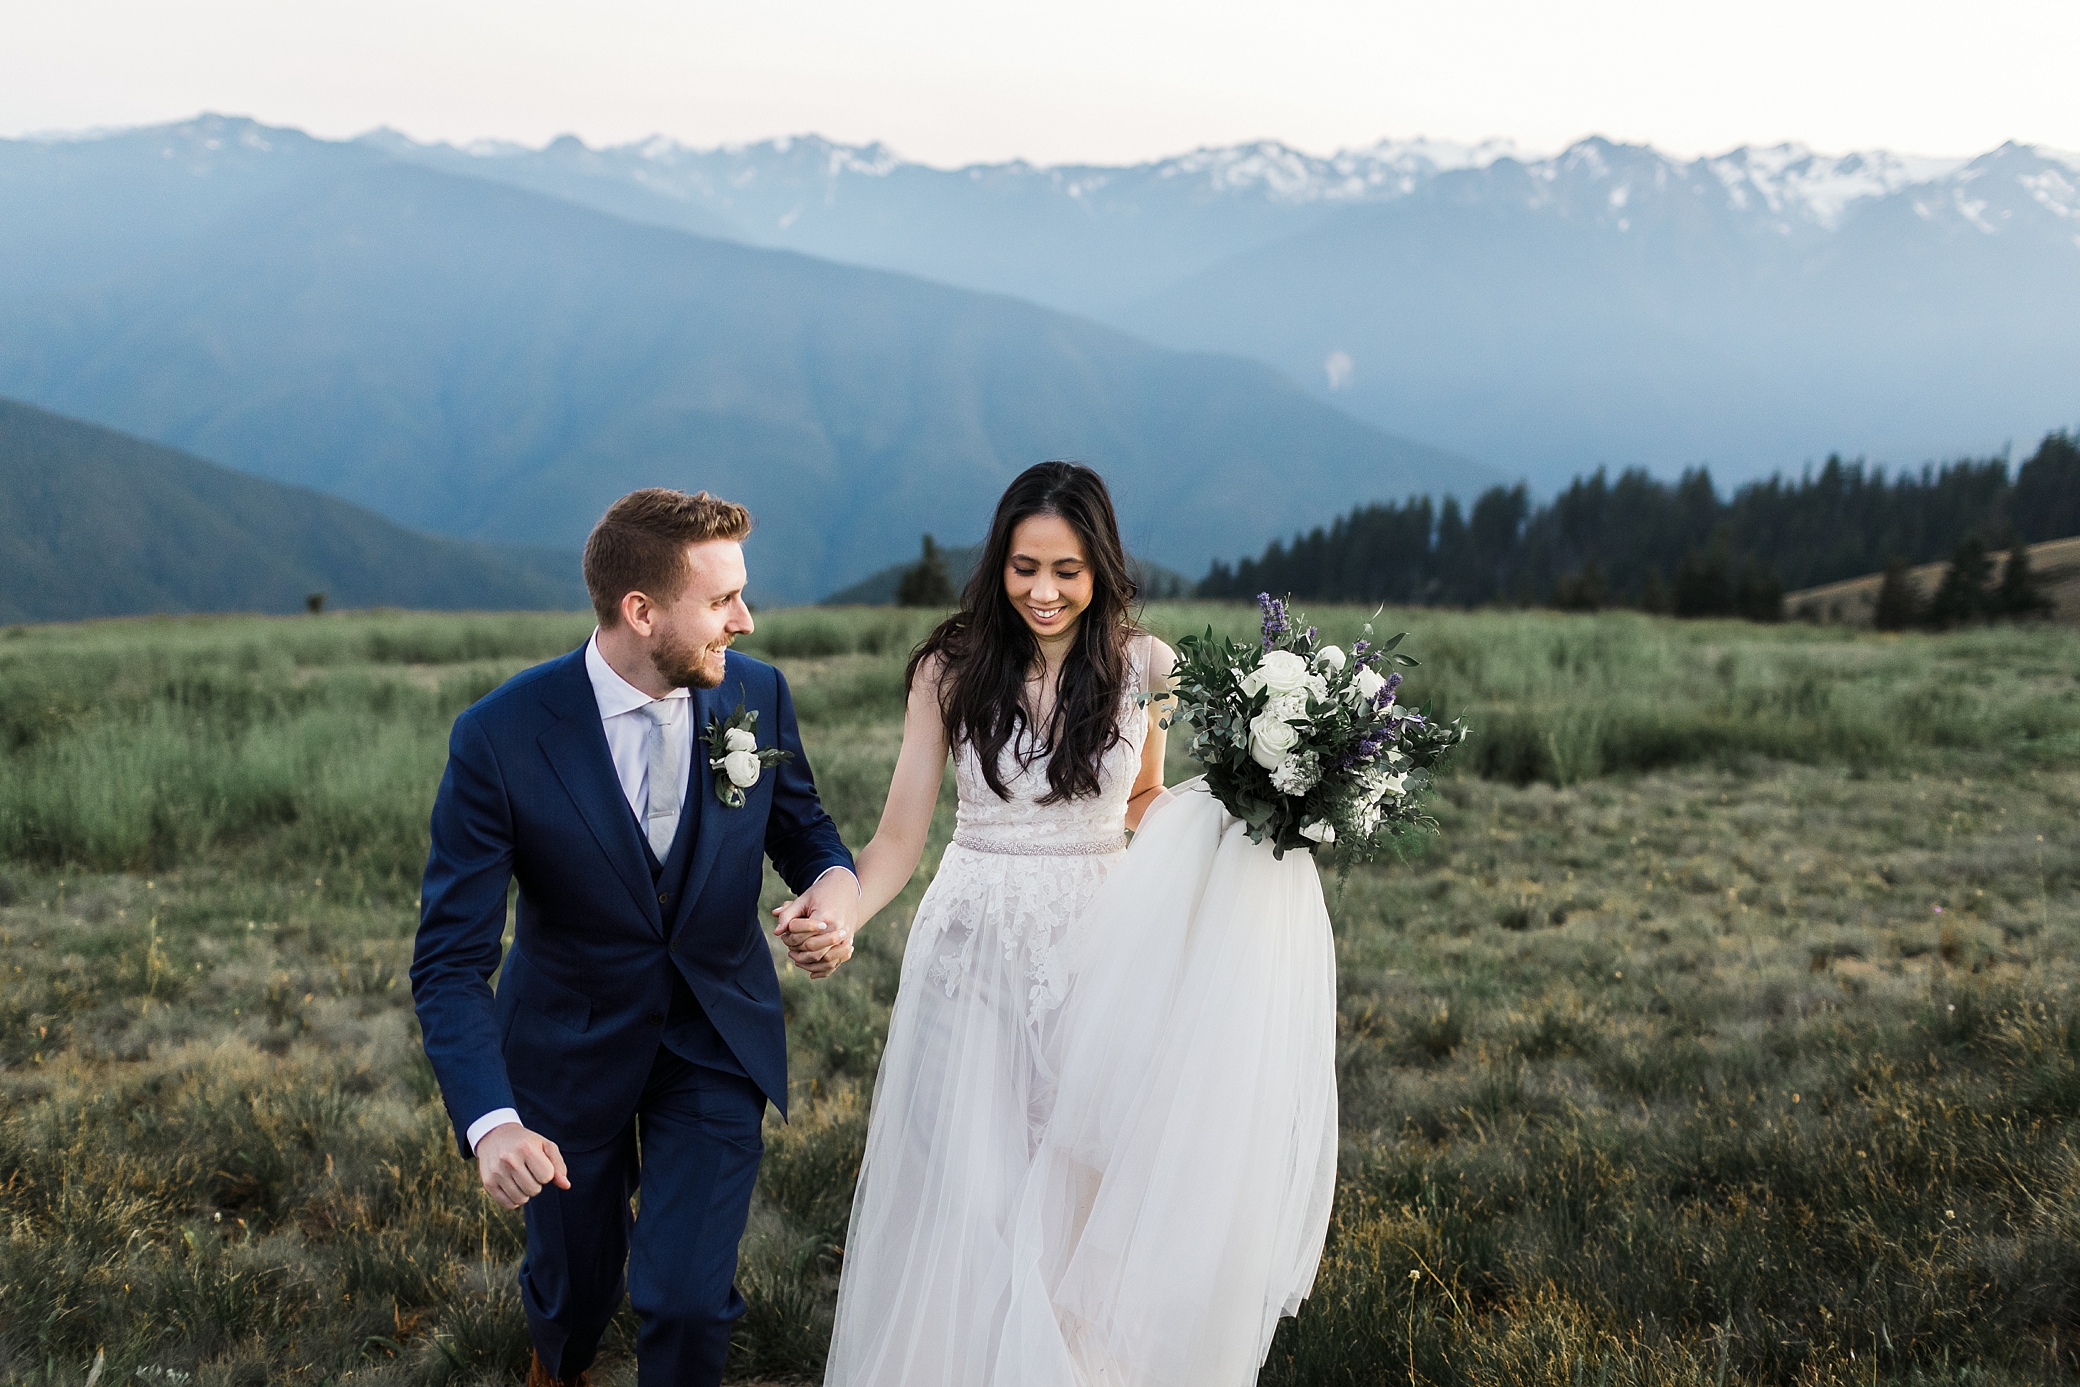 Olympic National Park Adventure Elopement | Bride and Groom Portraits | Megan Montalvo Photography